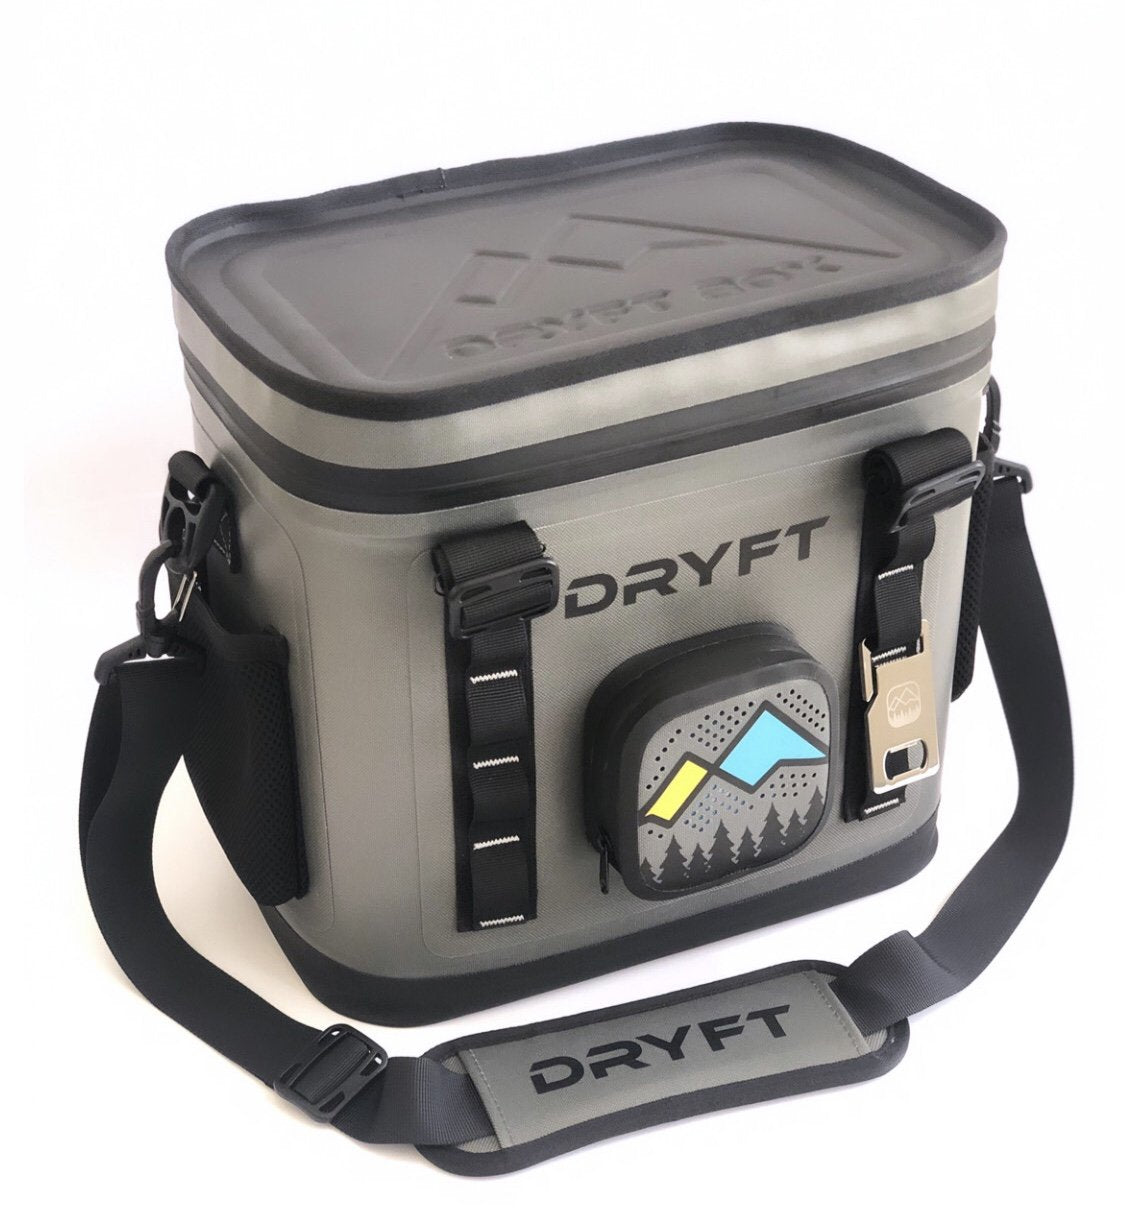 DRYFT BOX: All In One Cooler, Bluetooth Speaker, & Waterproof Storage